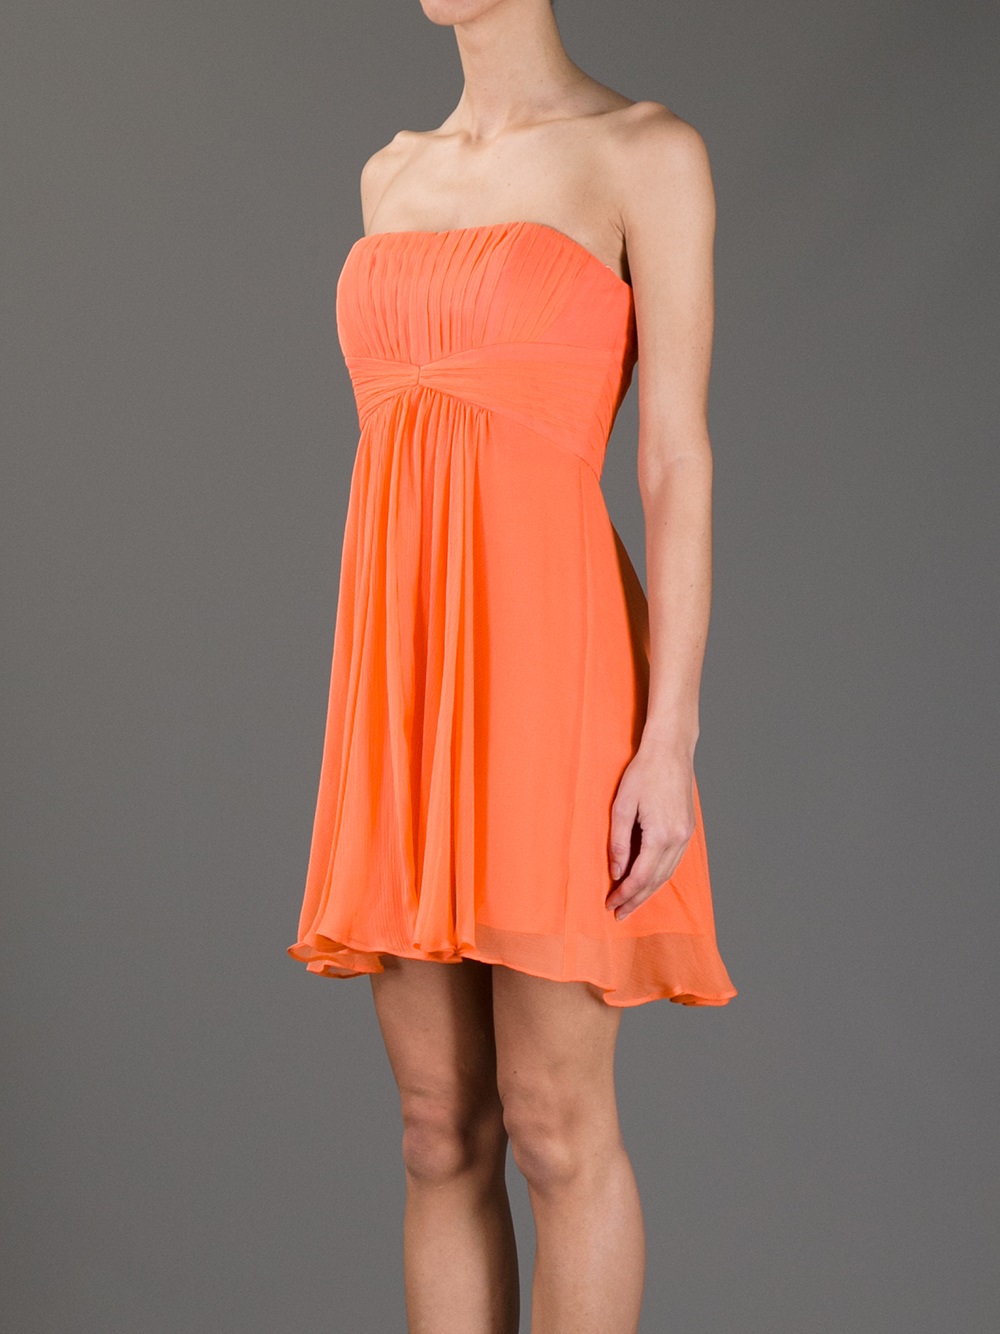 Lyst - Bcbgmaxazria Strapless Pleated Dress in Orange